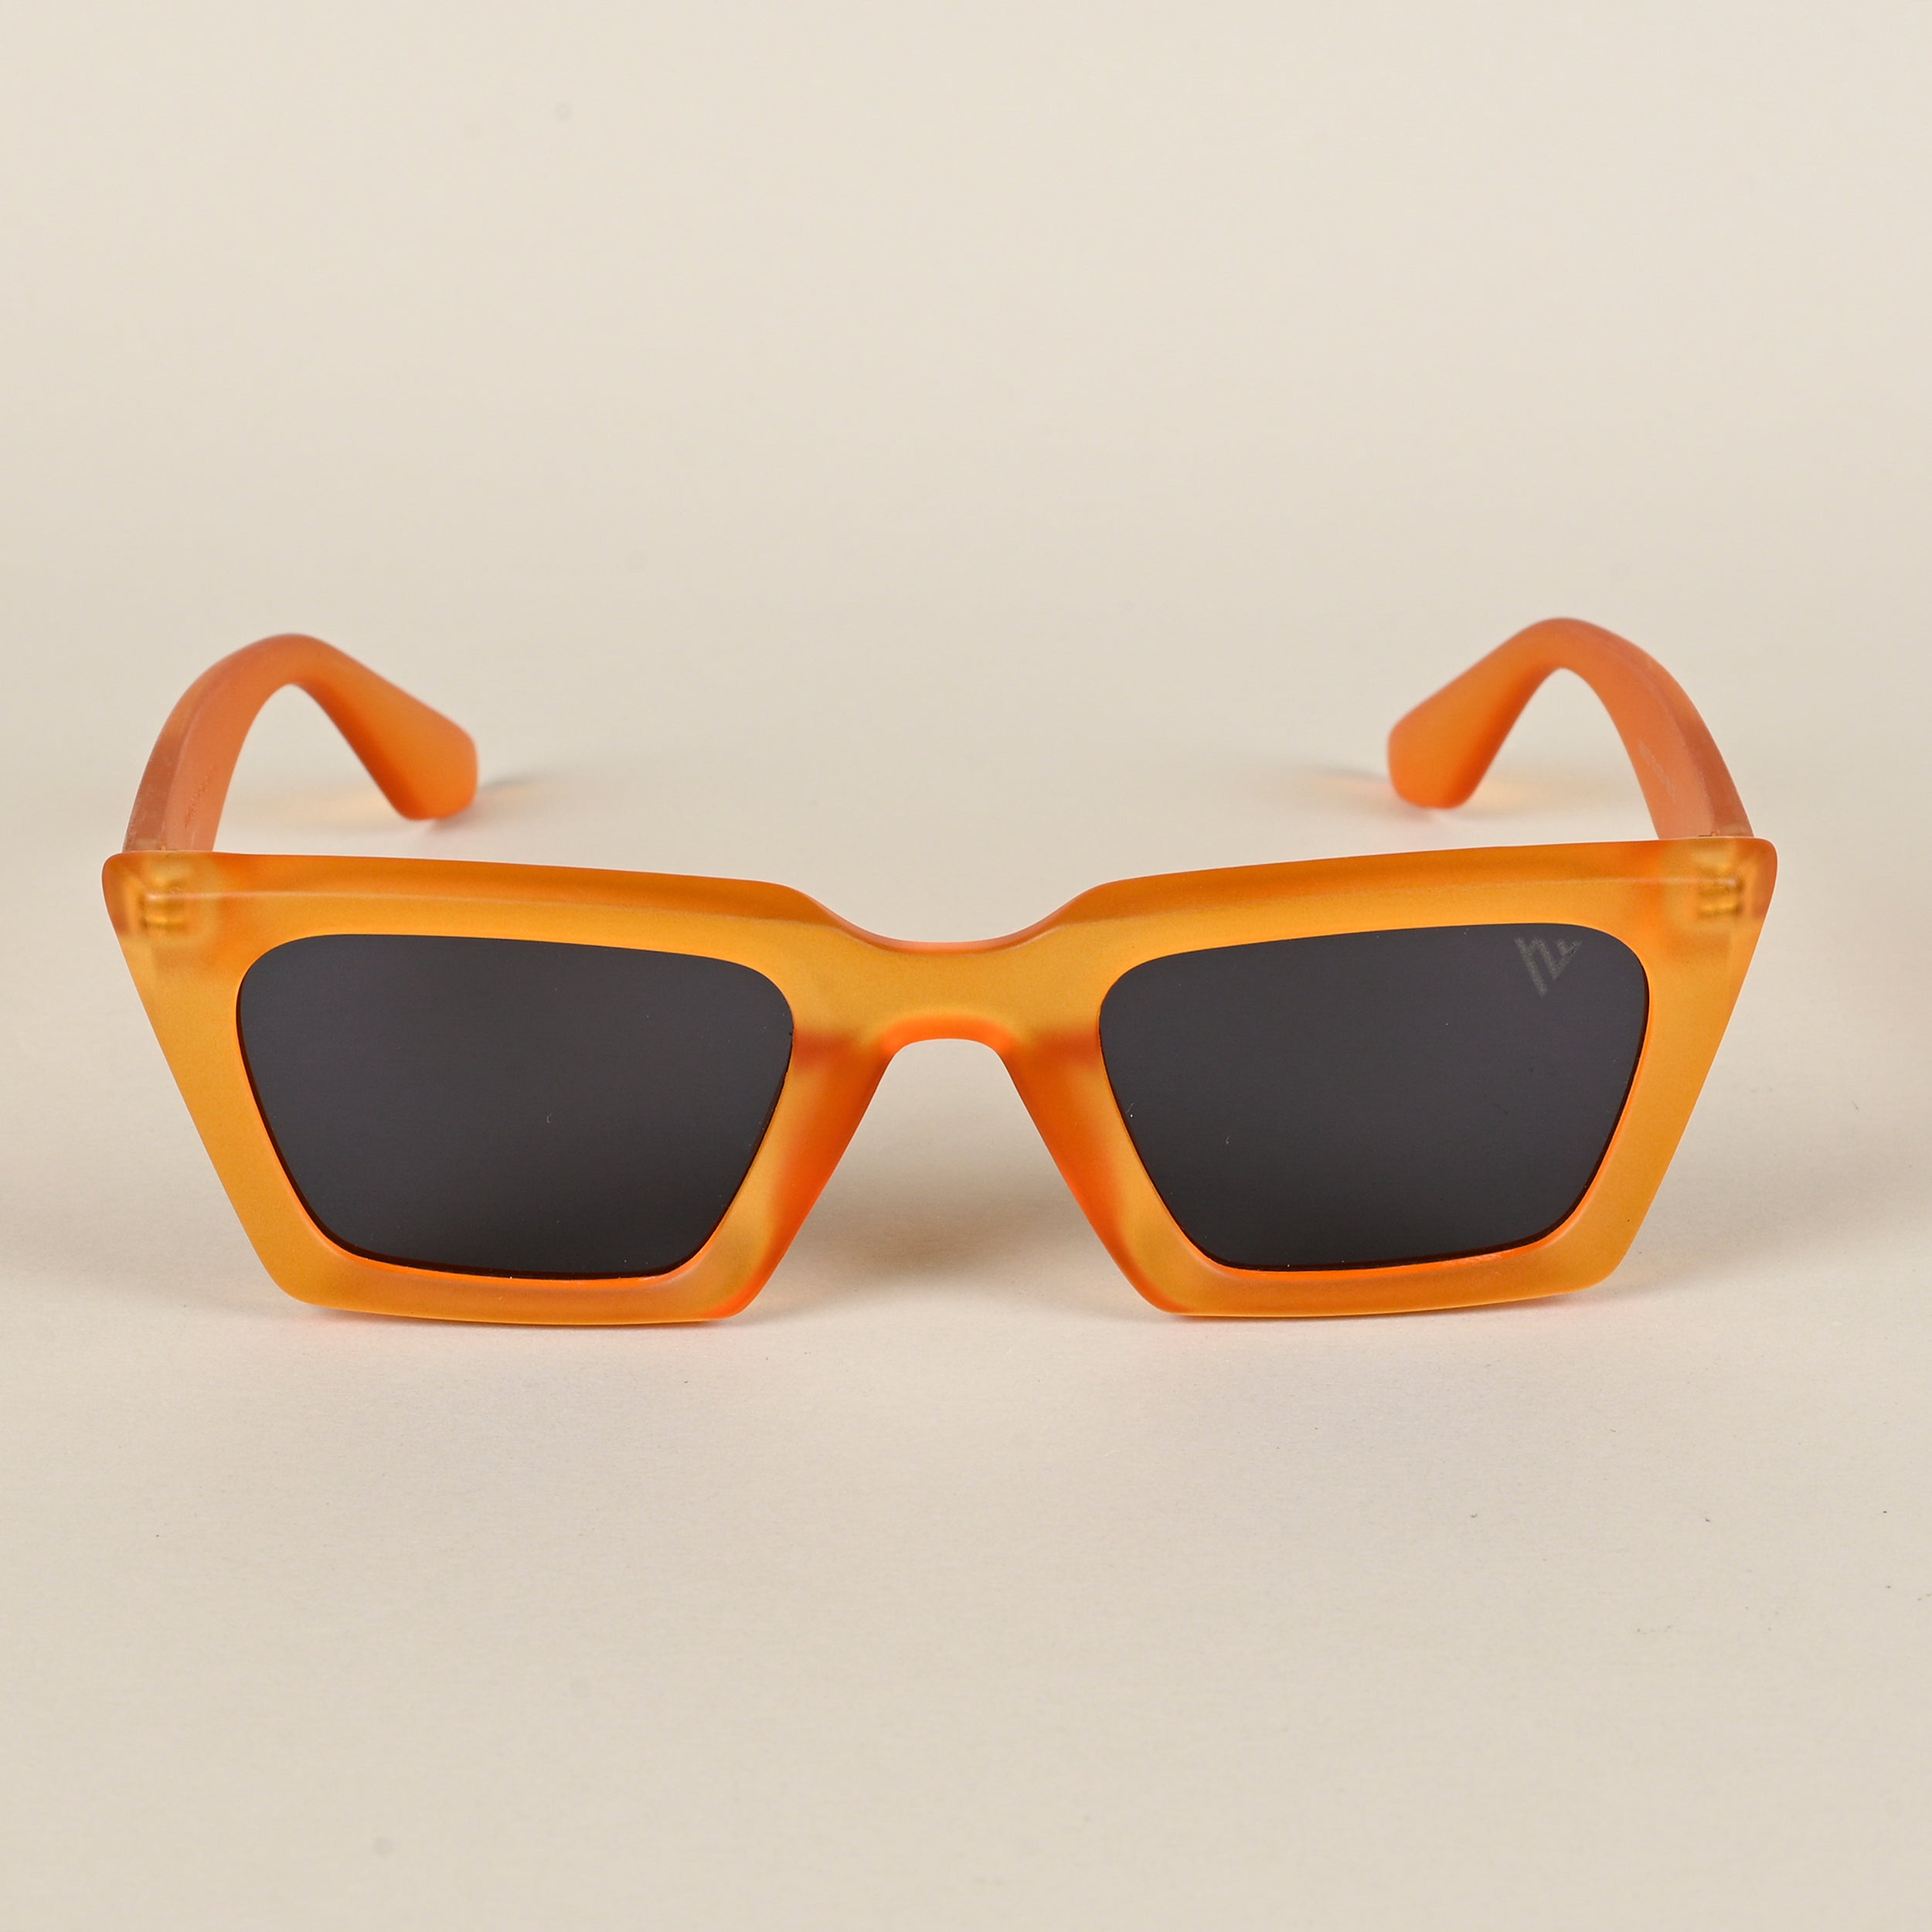 Voyage Black Wayfarer Sunglasses for Men & Women (86632MG4125)